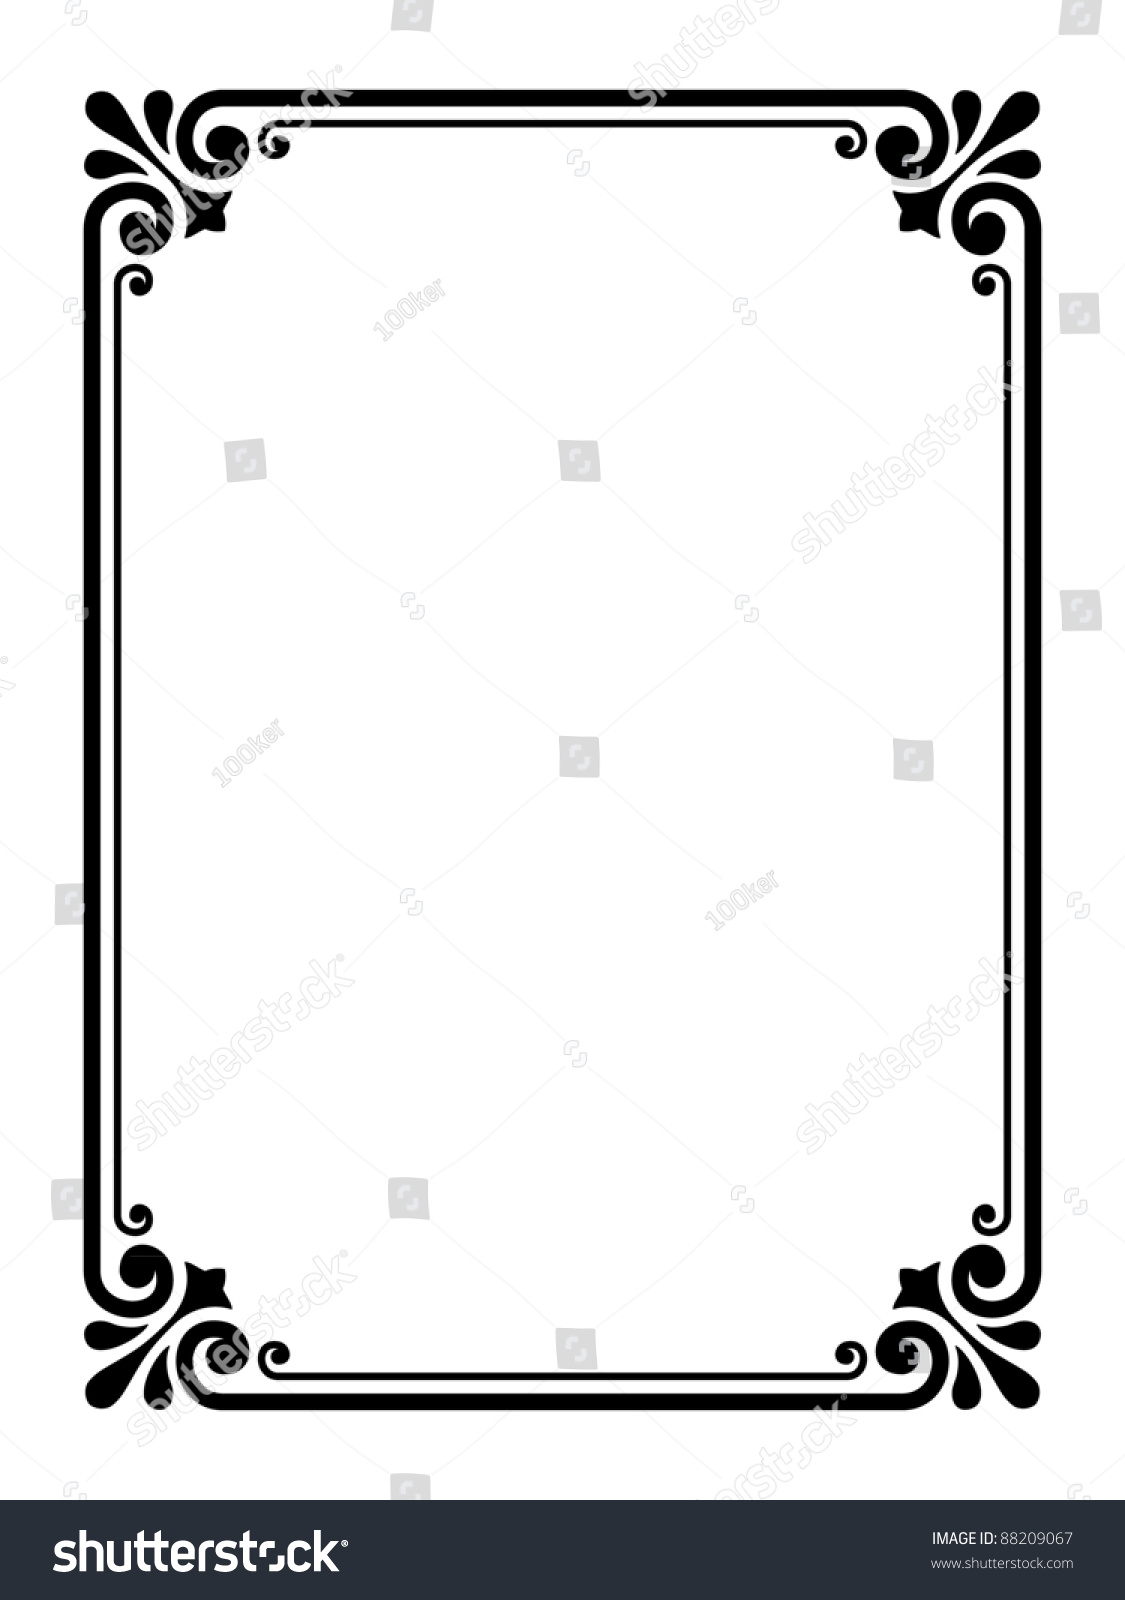 Simple Ornamental Decorative Frame Stock Vector 88209067 - Shutterstock